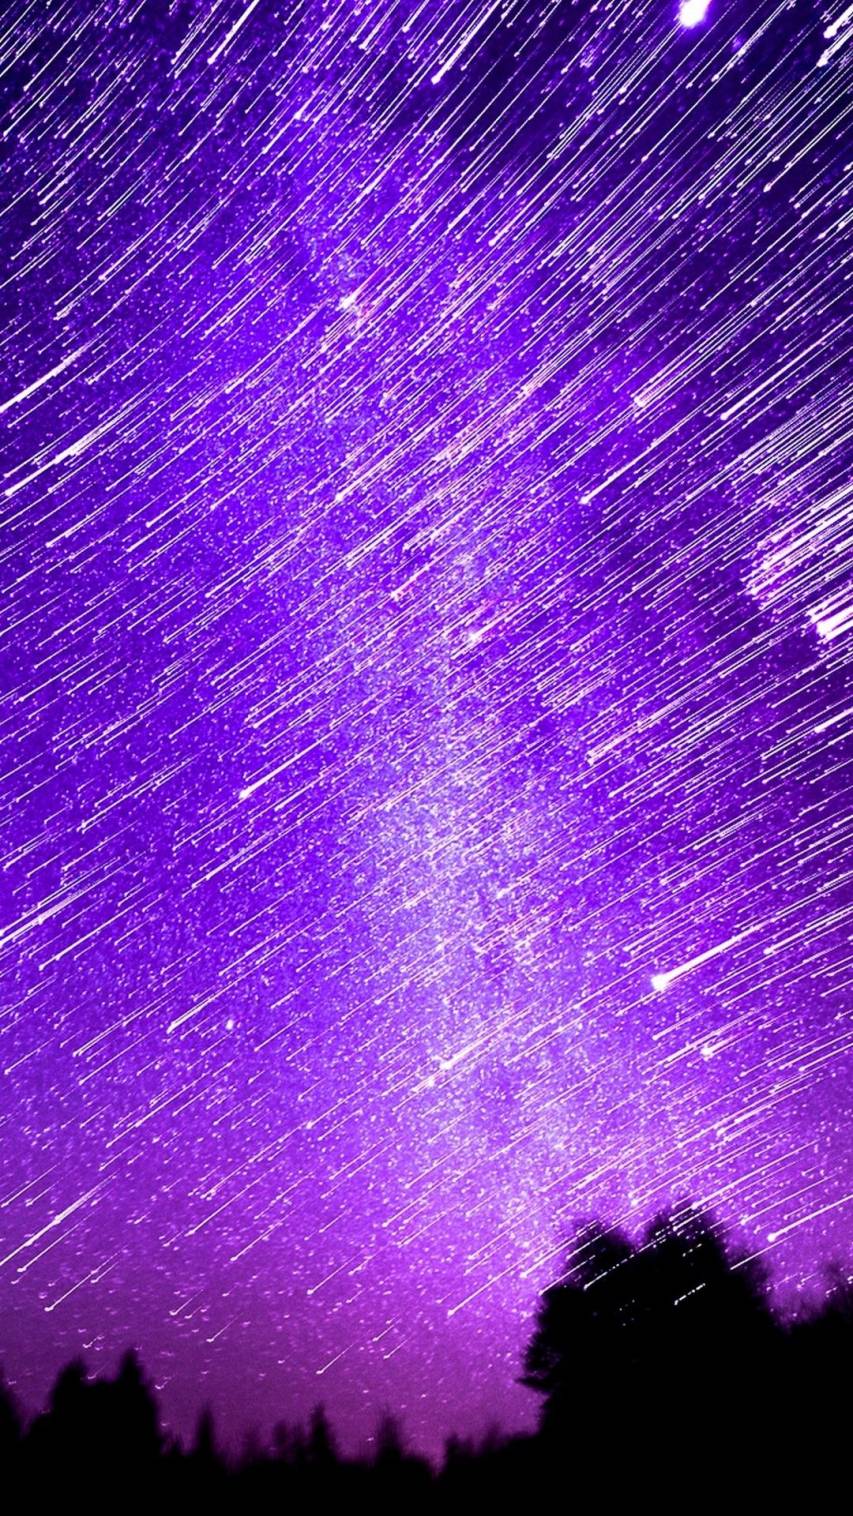 A purple sky with shooting stars and a tree - Dark purple